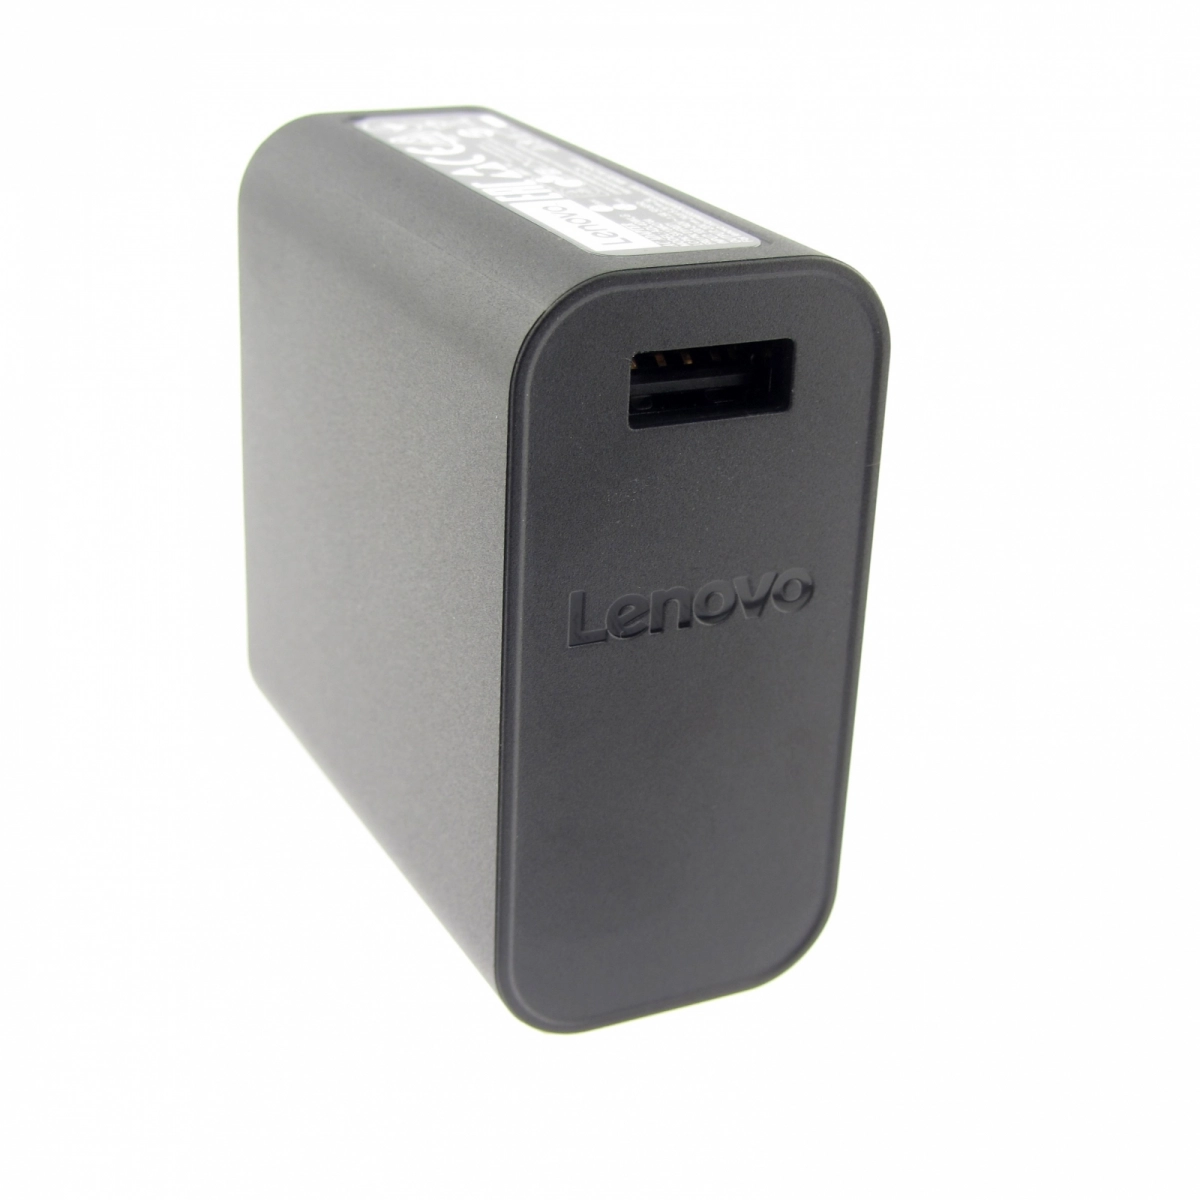 Original Netzteil für LENOVO ADL40WDE 36200566, 20V, 2A, Stecker USB, ohne USB-Kabel